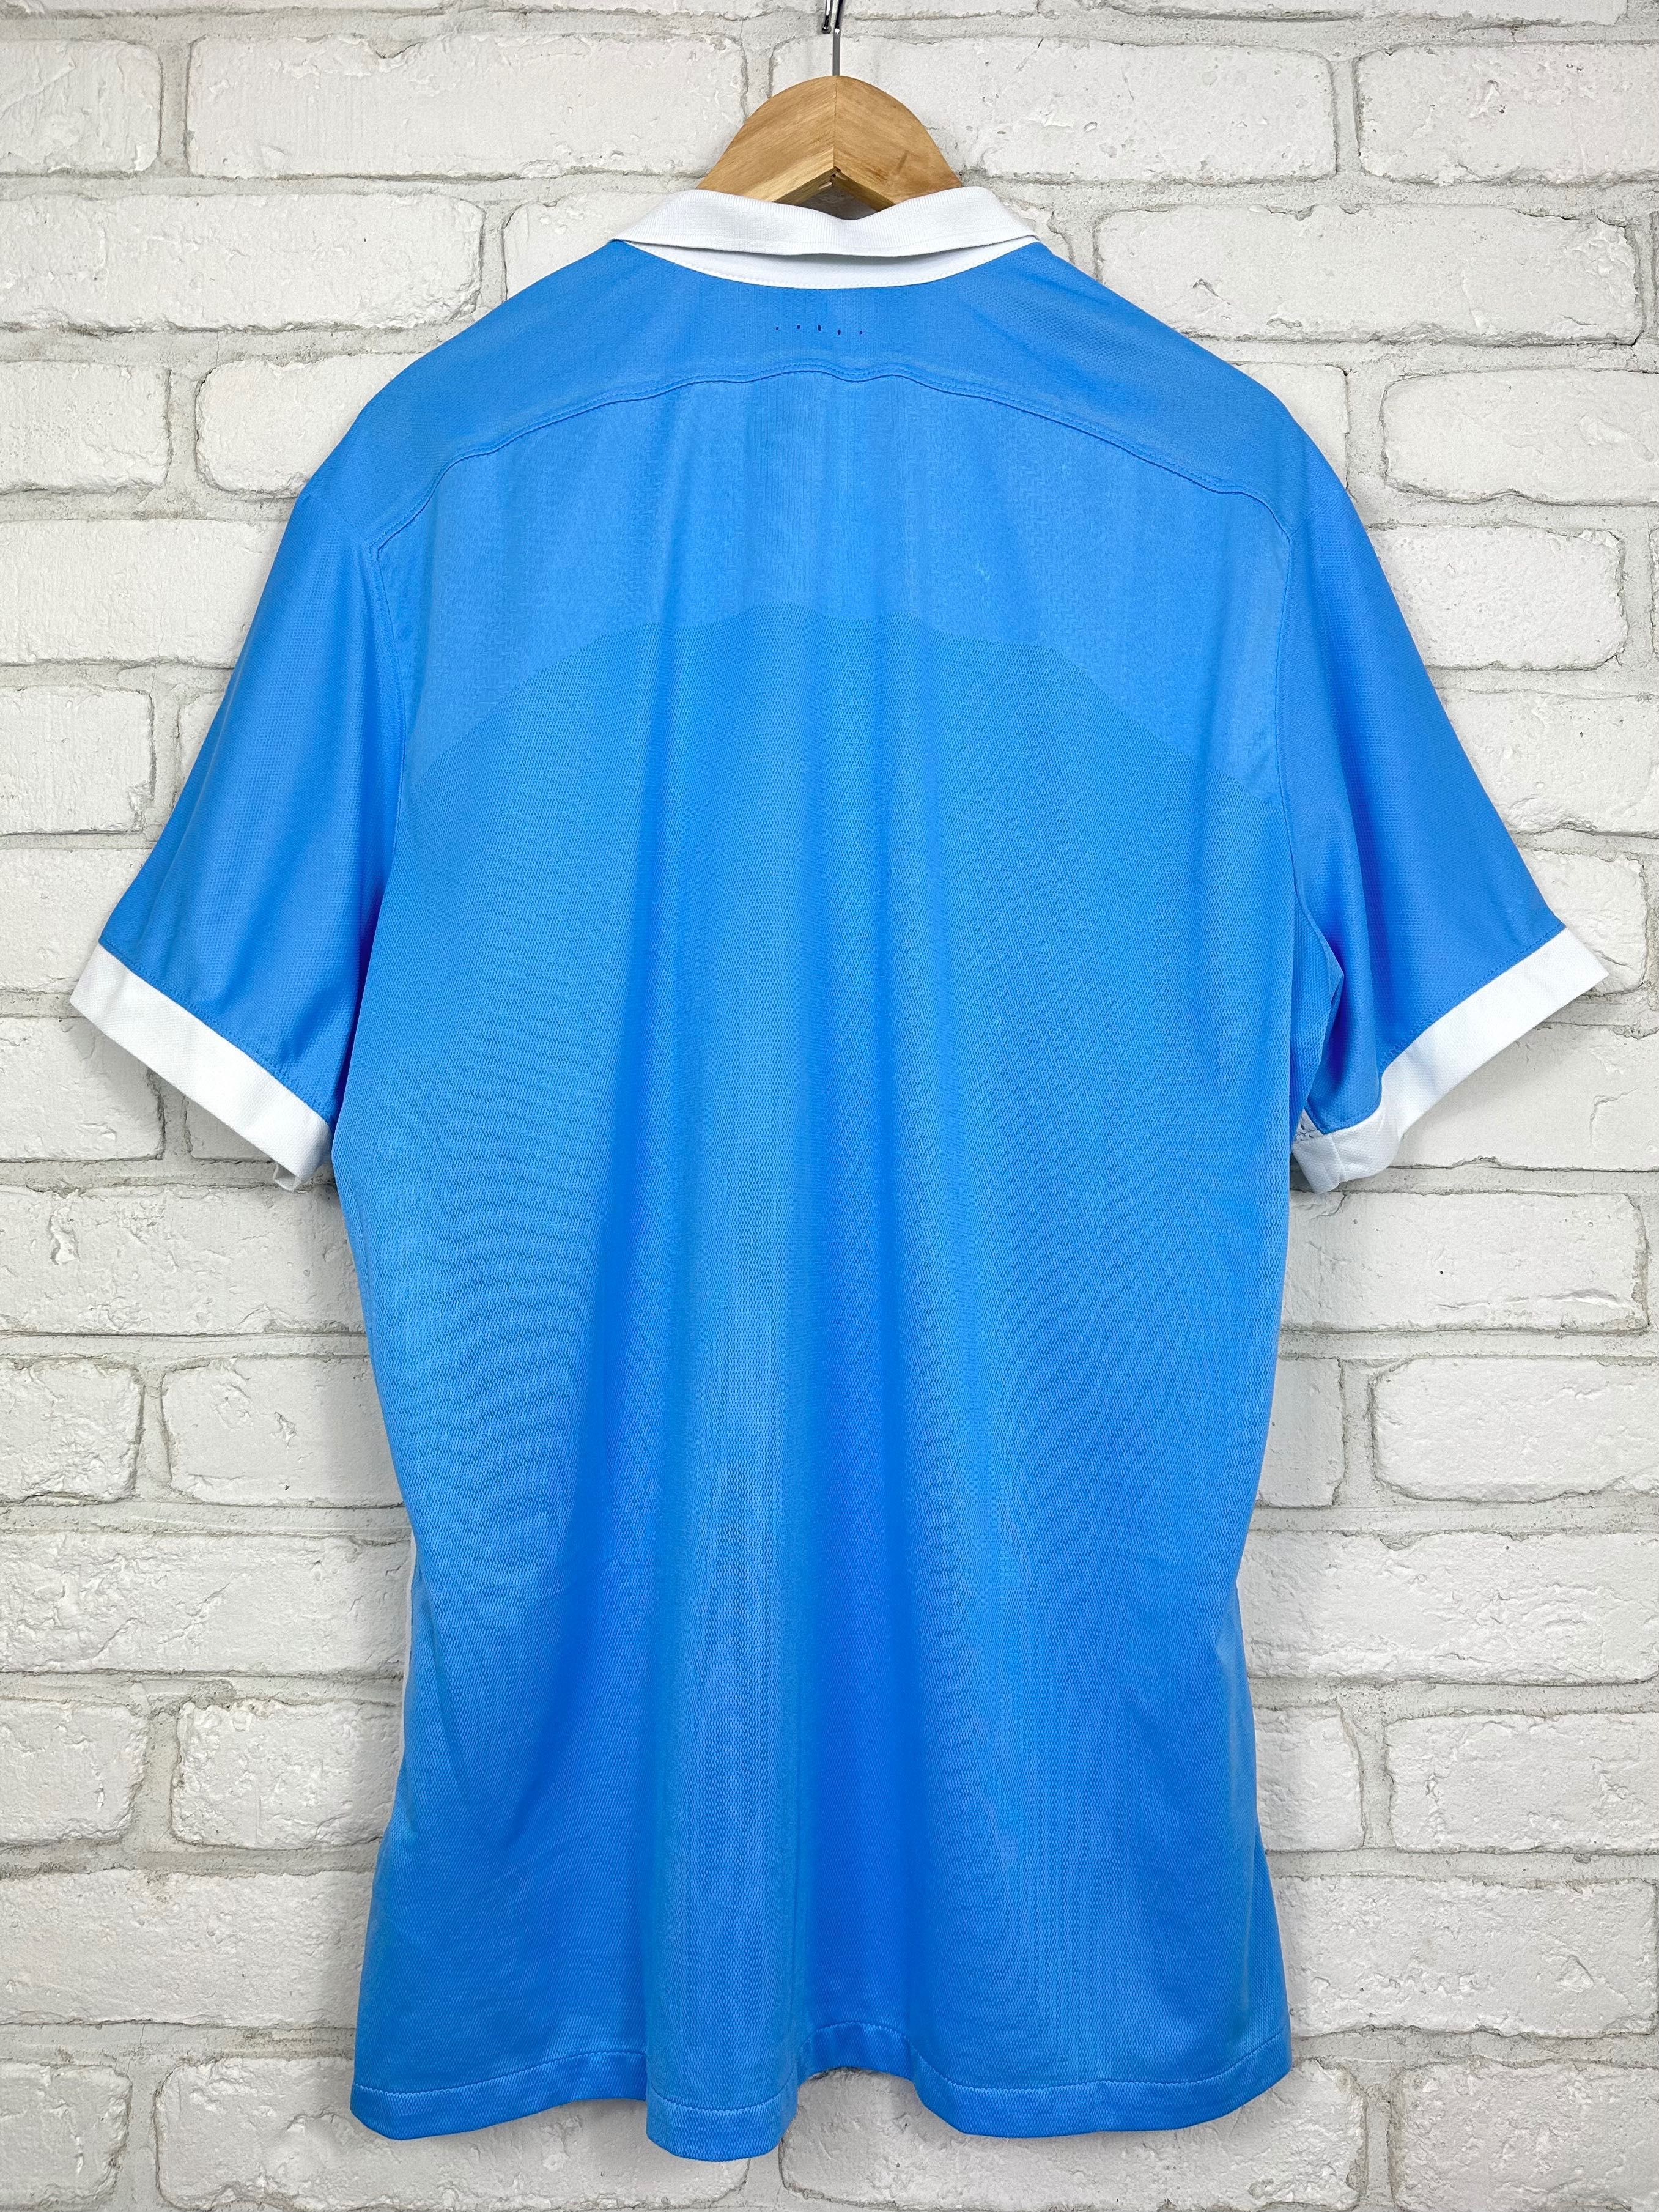 Koszulka piłkarska  Manchester City 2015/16; koszulka domowa